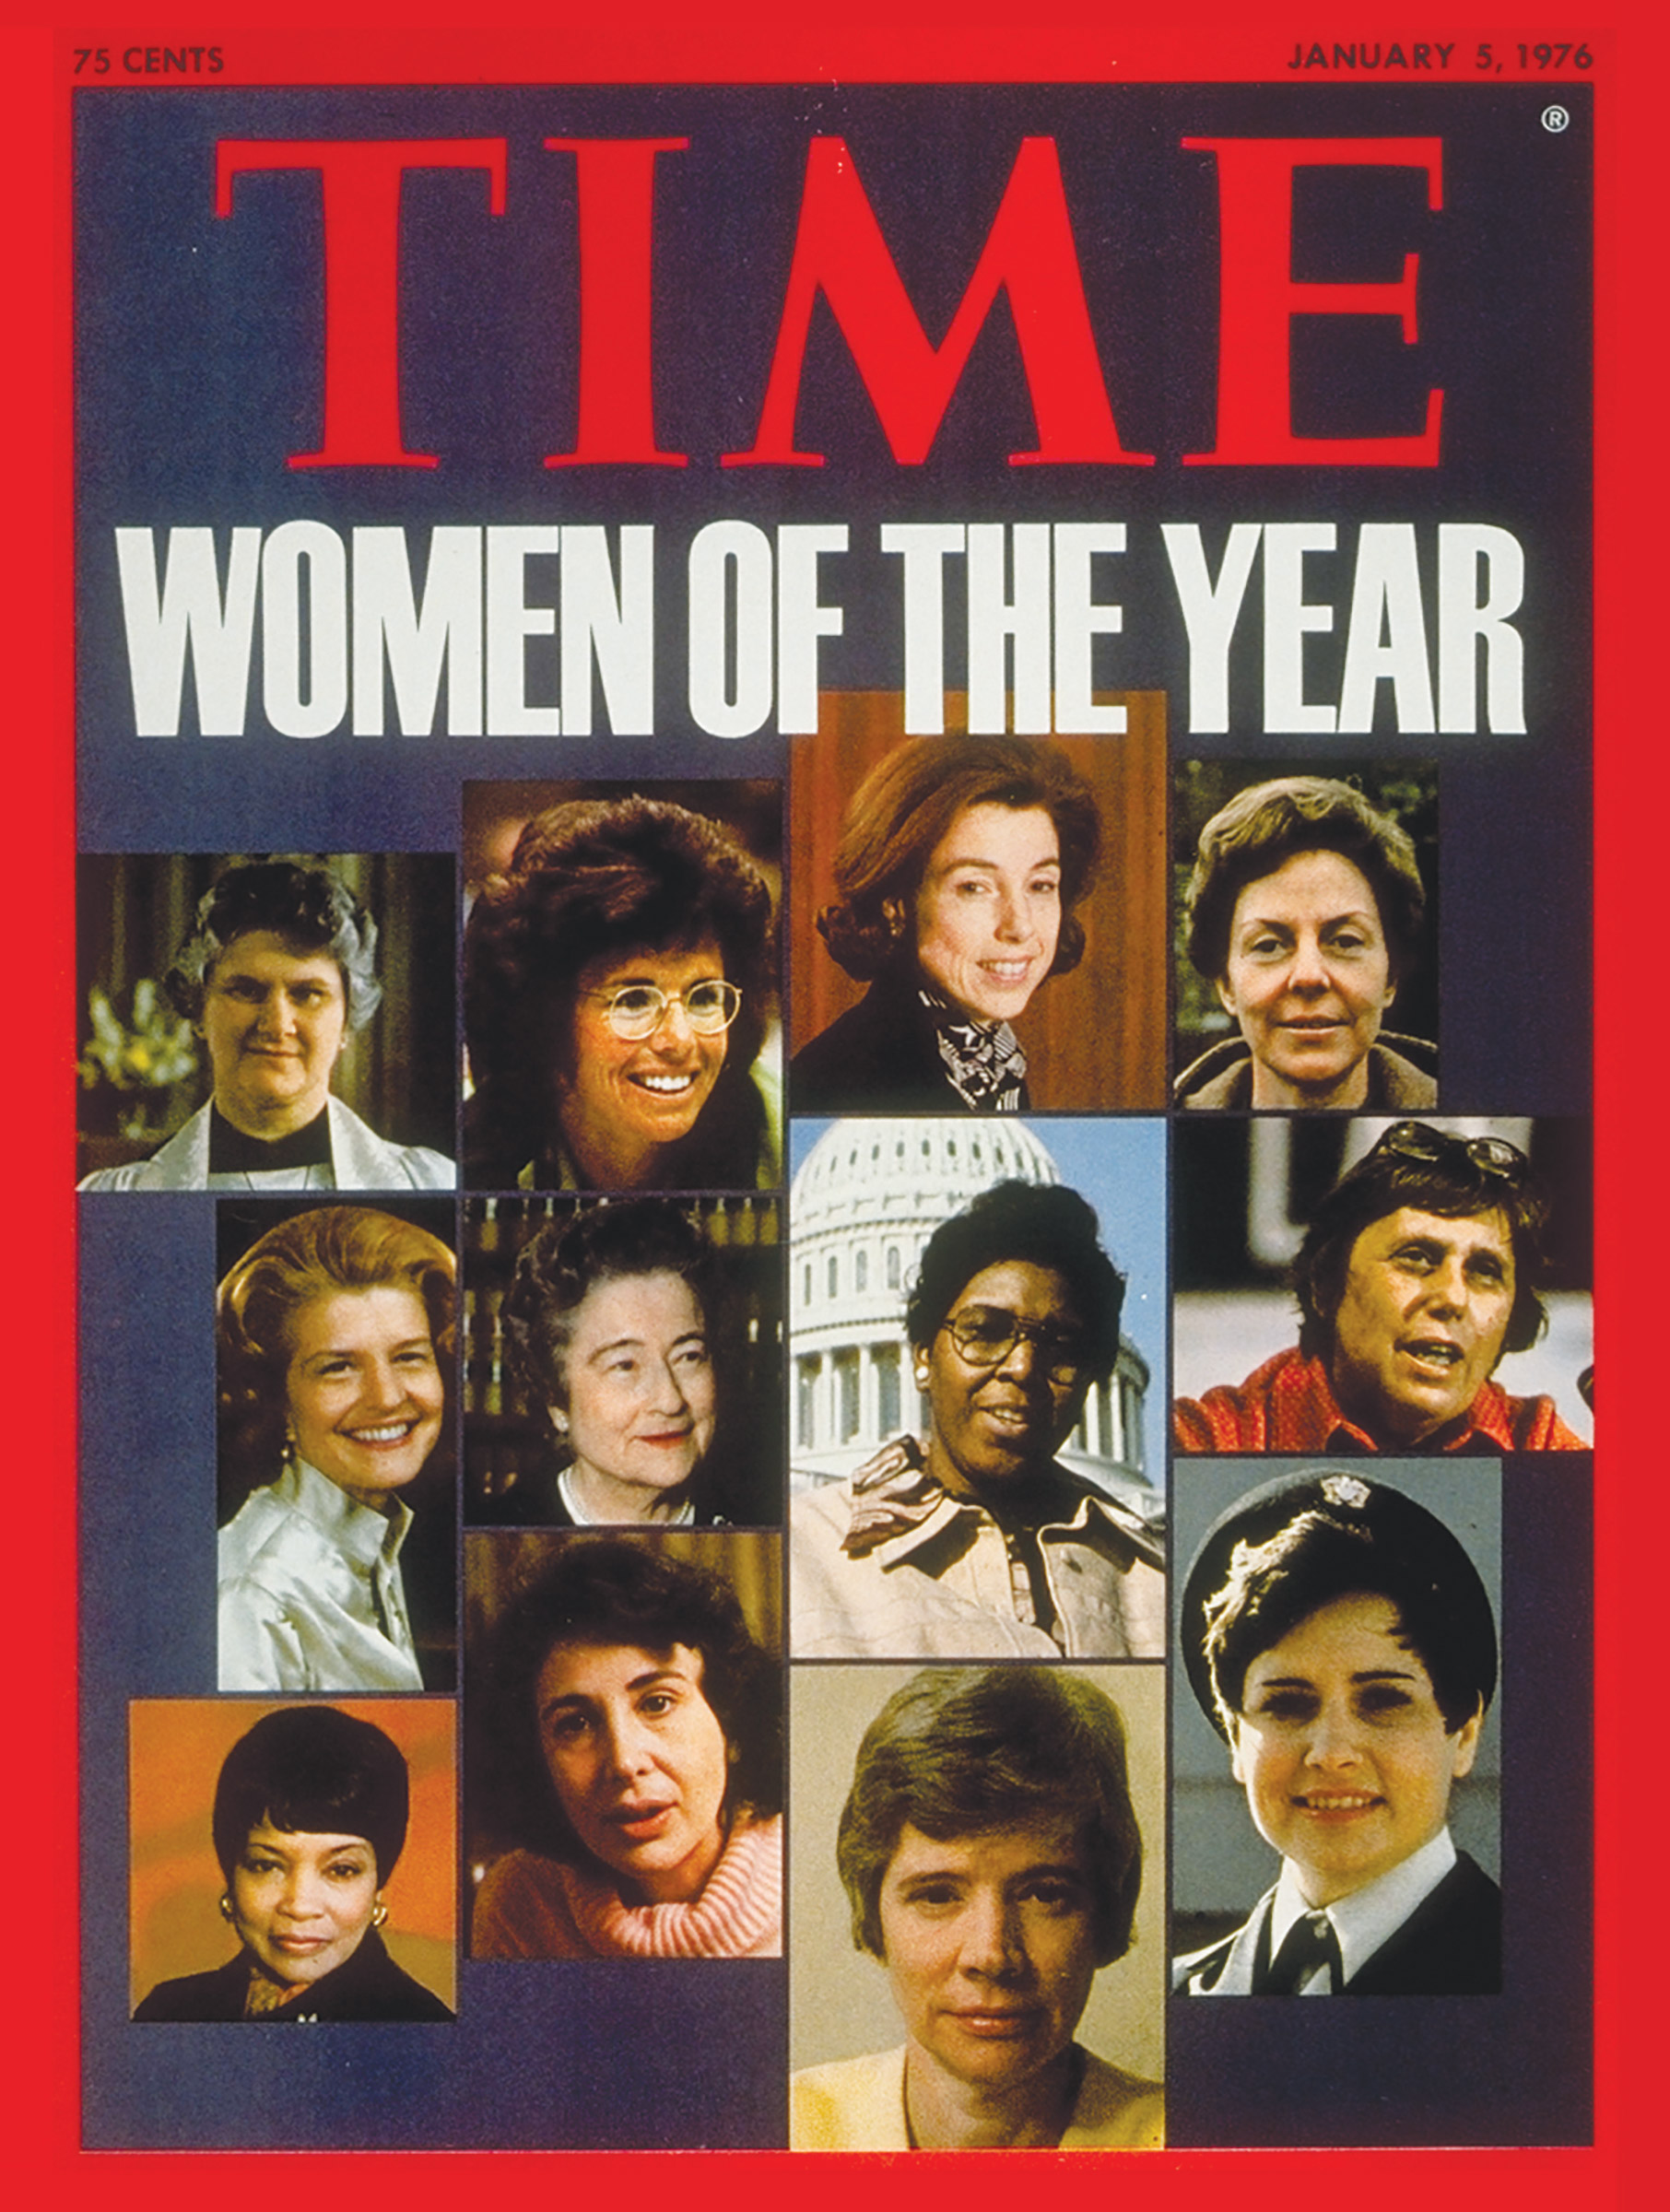 Women of the Year: 1975 American Women